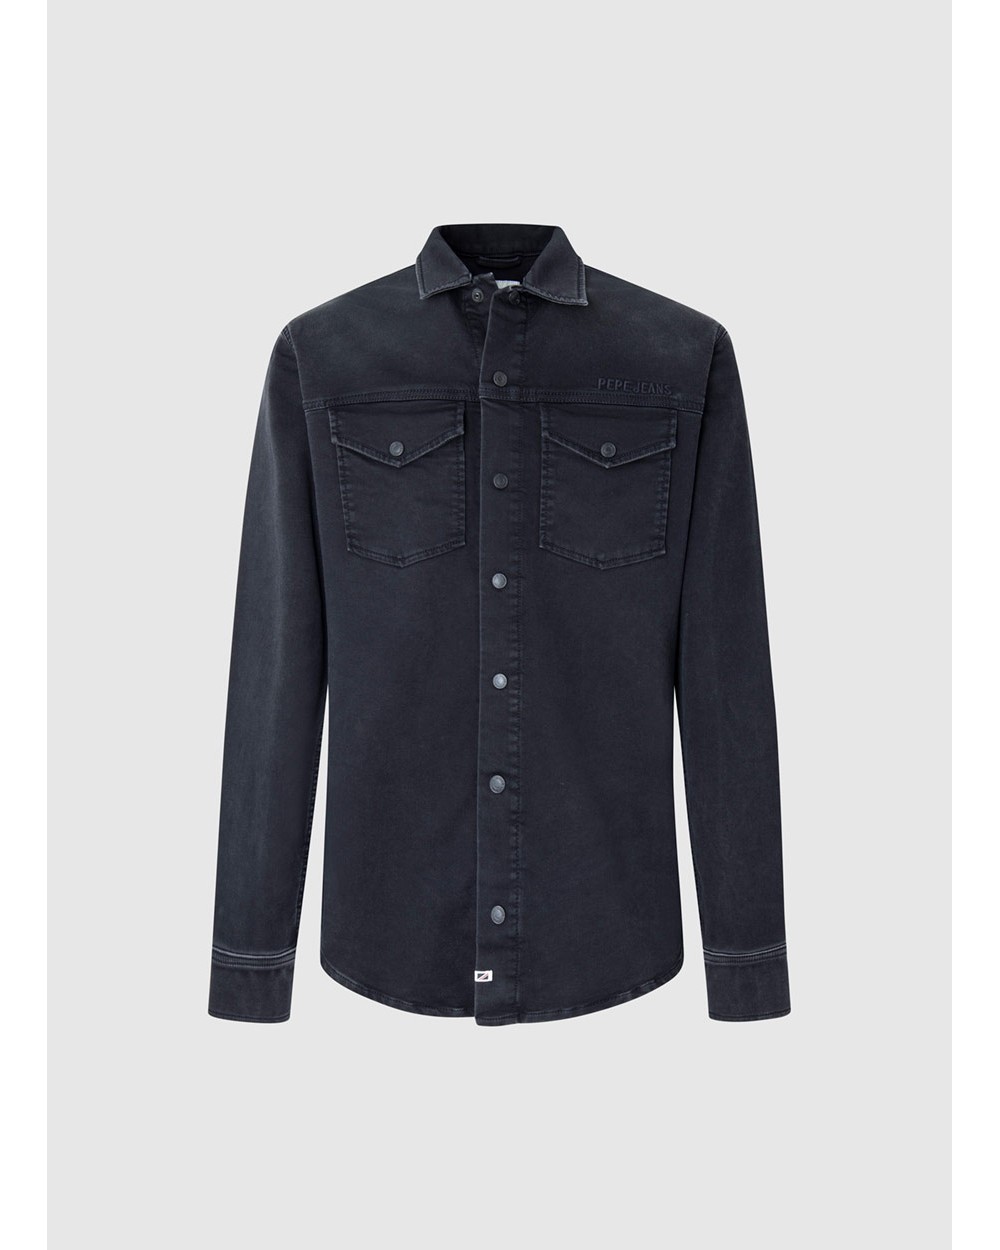 Pepe Jeans plain black shirt in cotton - G3-MCS12503 | G3fashion.com